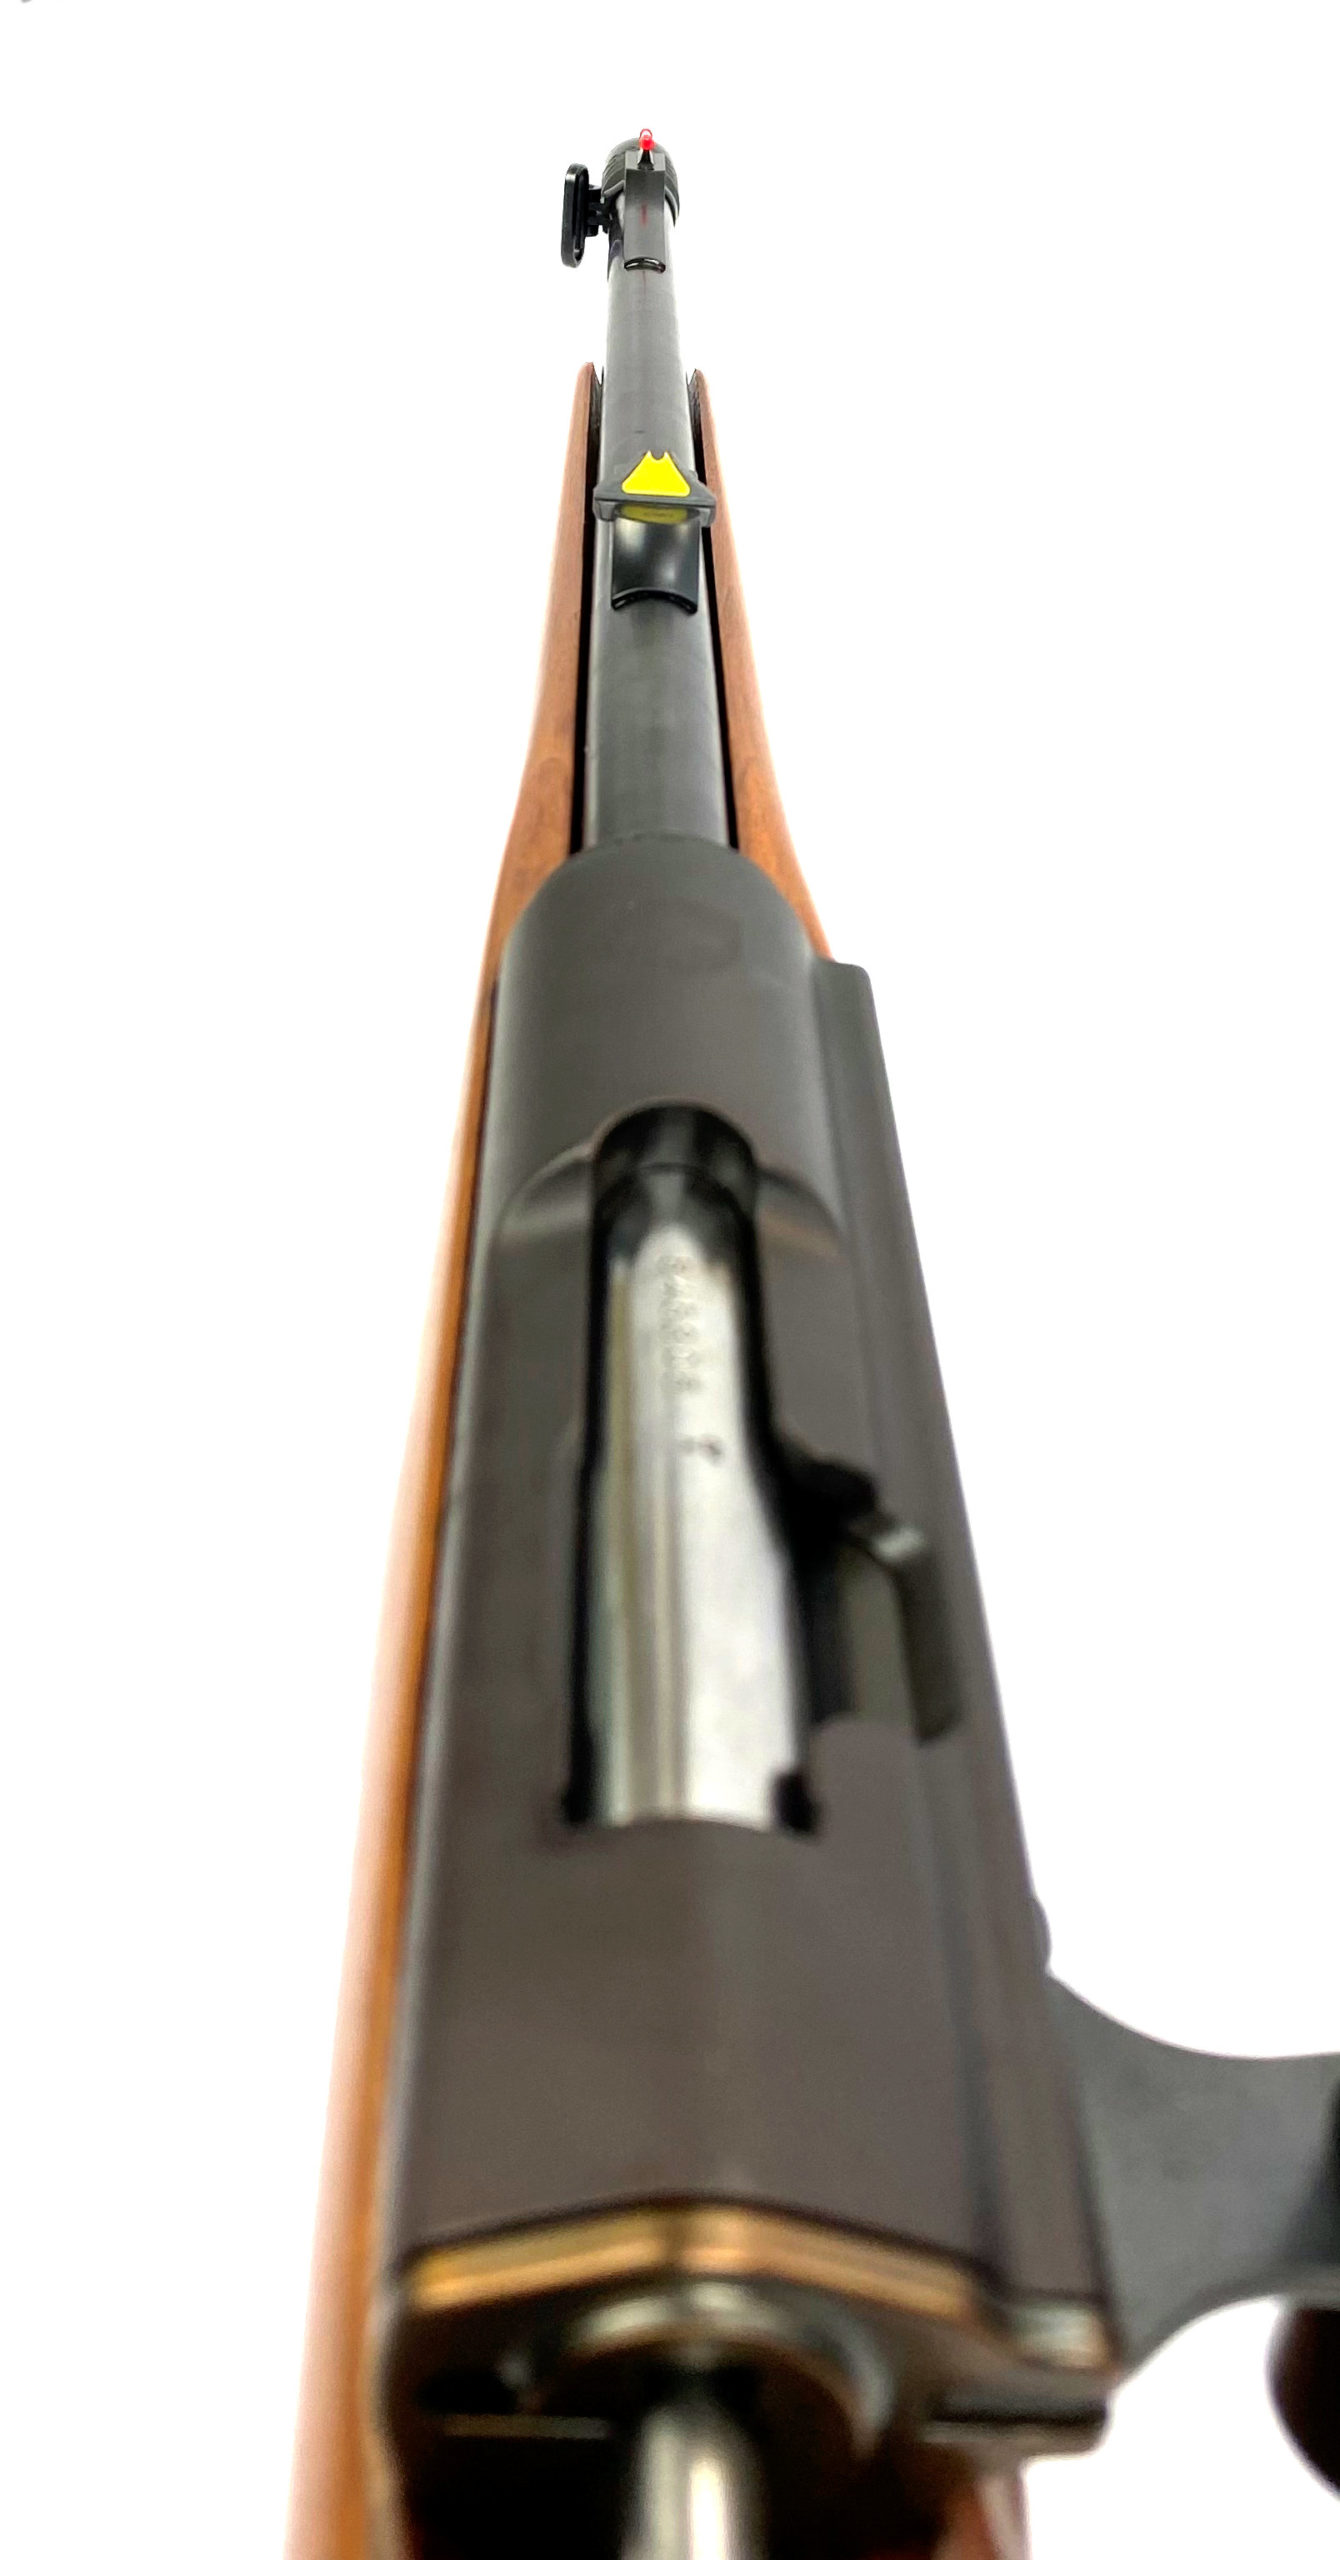 K31 BATTUE calibre 7.5x55 GP11 Schmidt Rubin